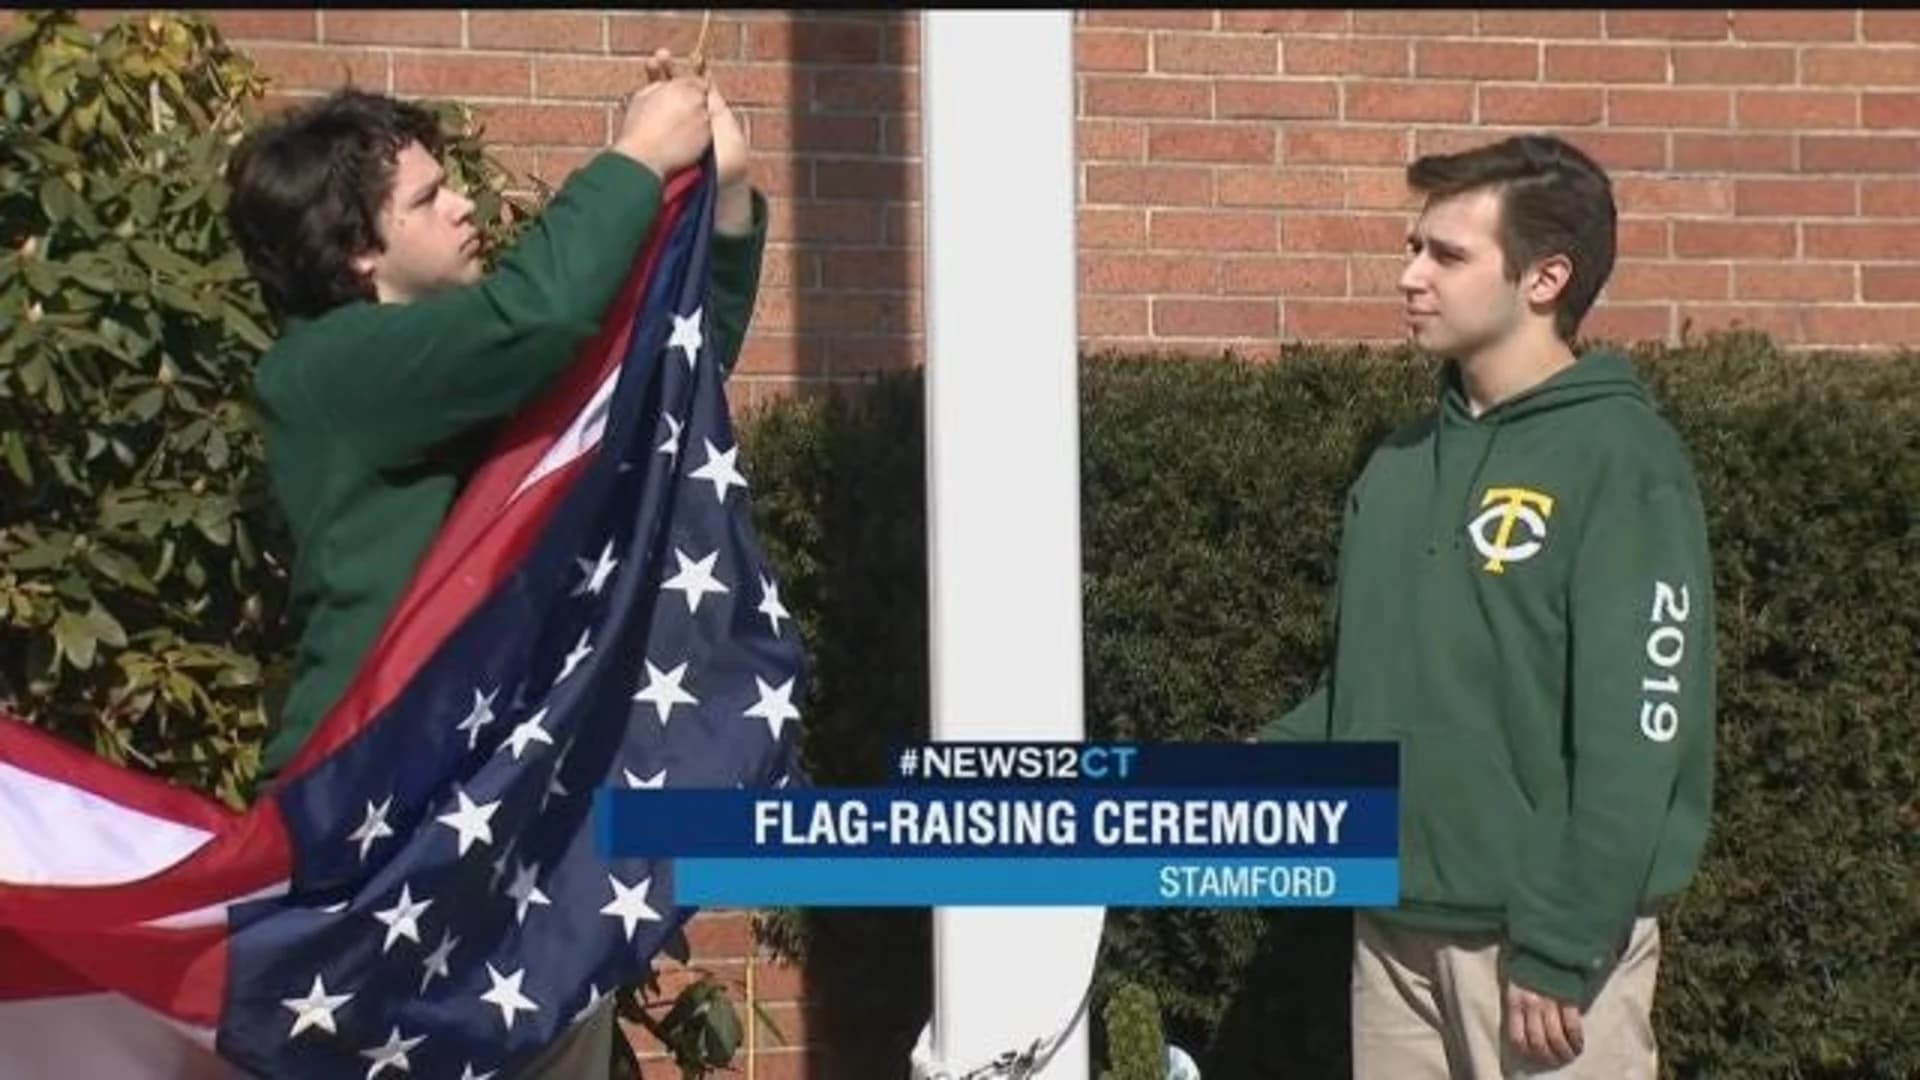 Stamford Trinity Catholic celebrates new renovations with flag-raising ceremony